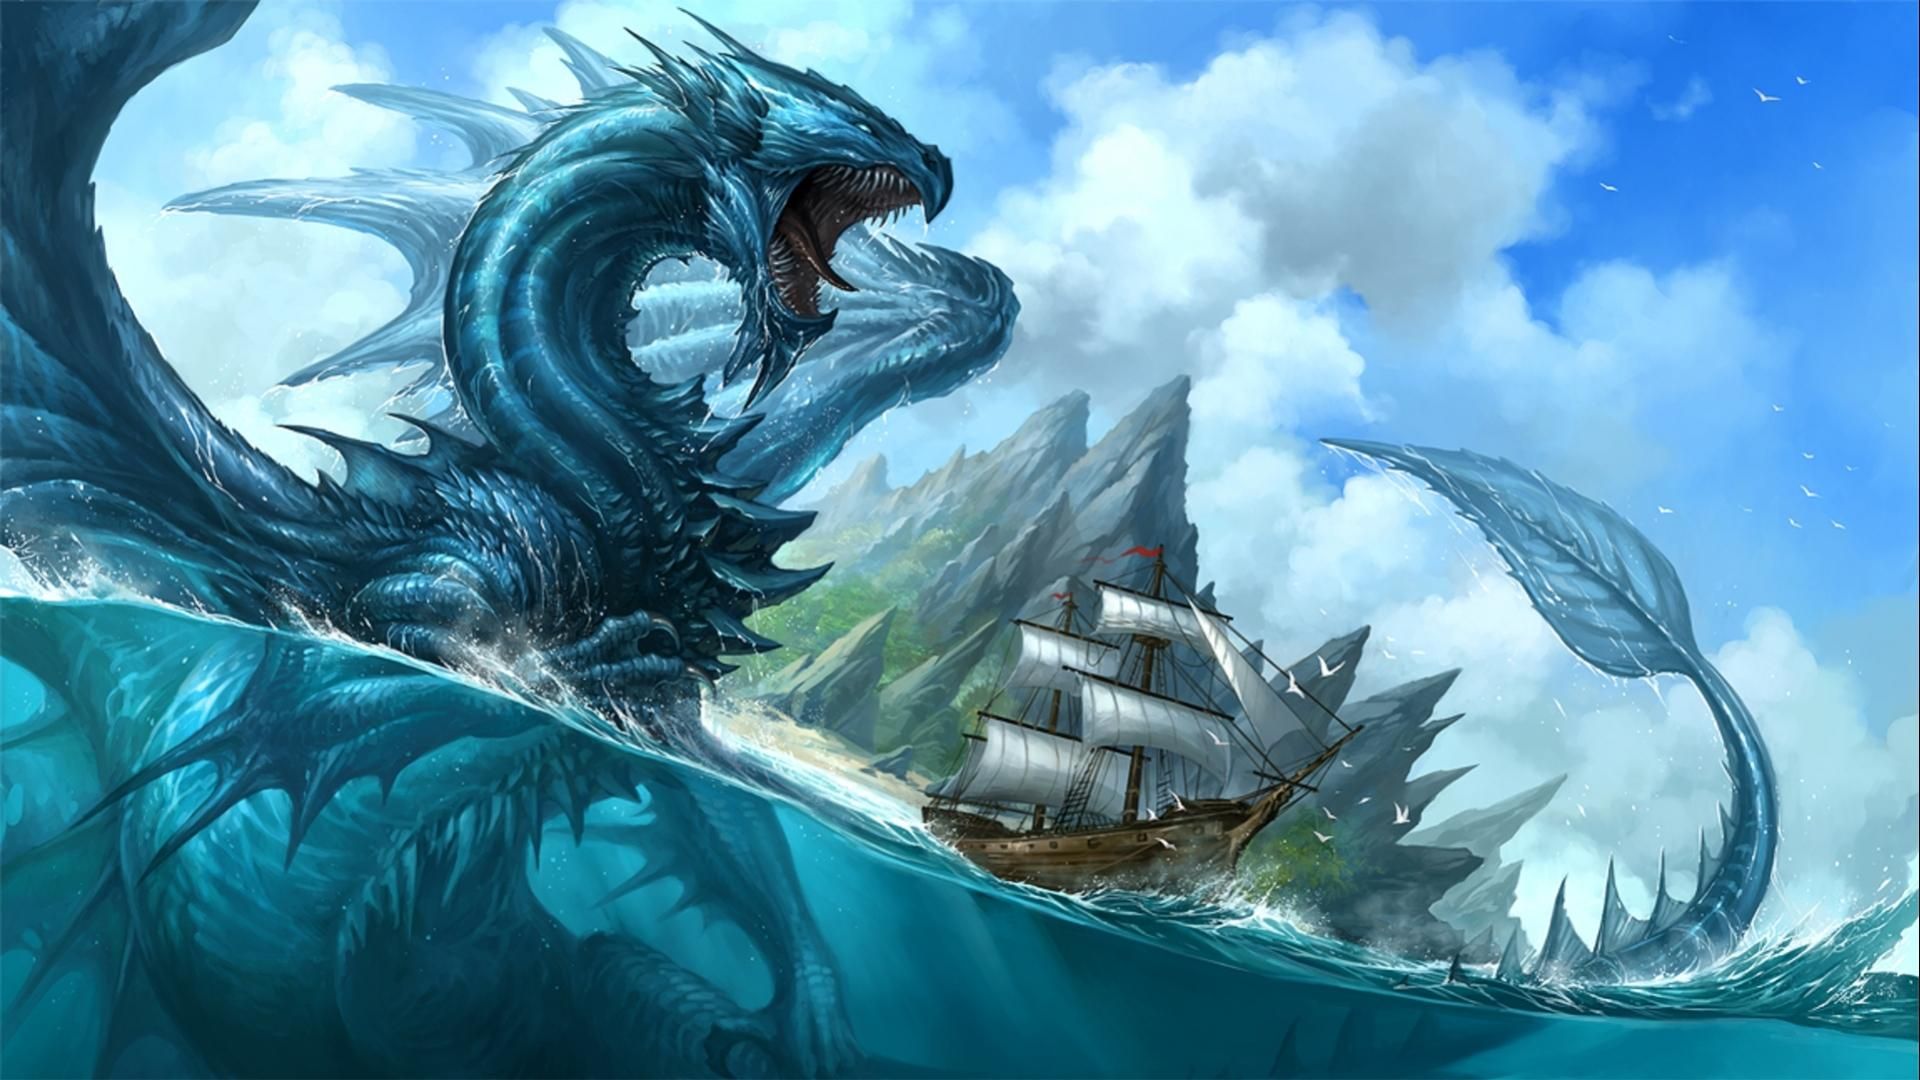 Realistic water dragon.